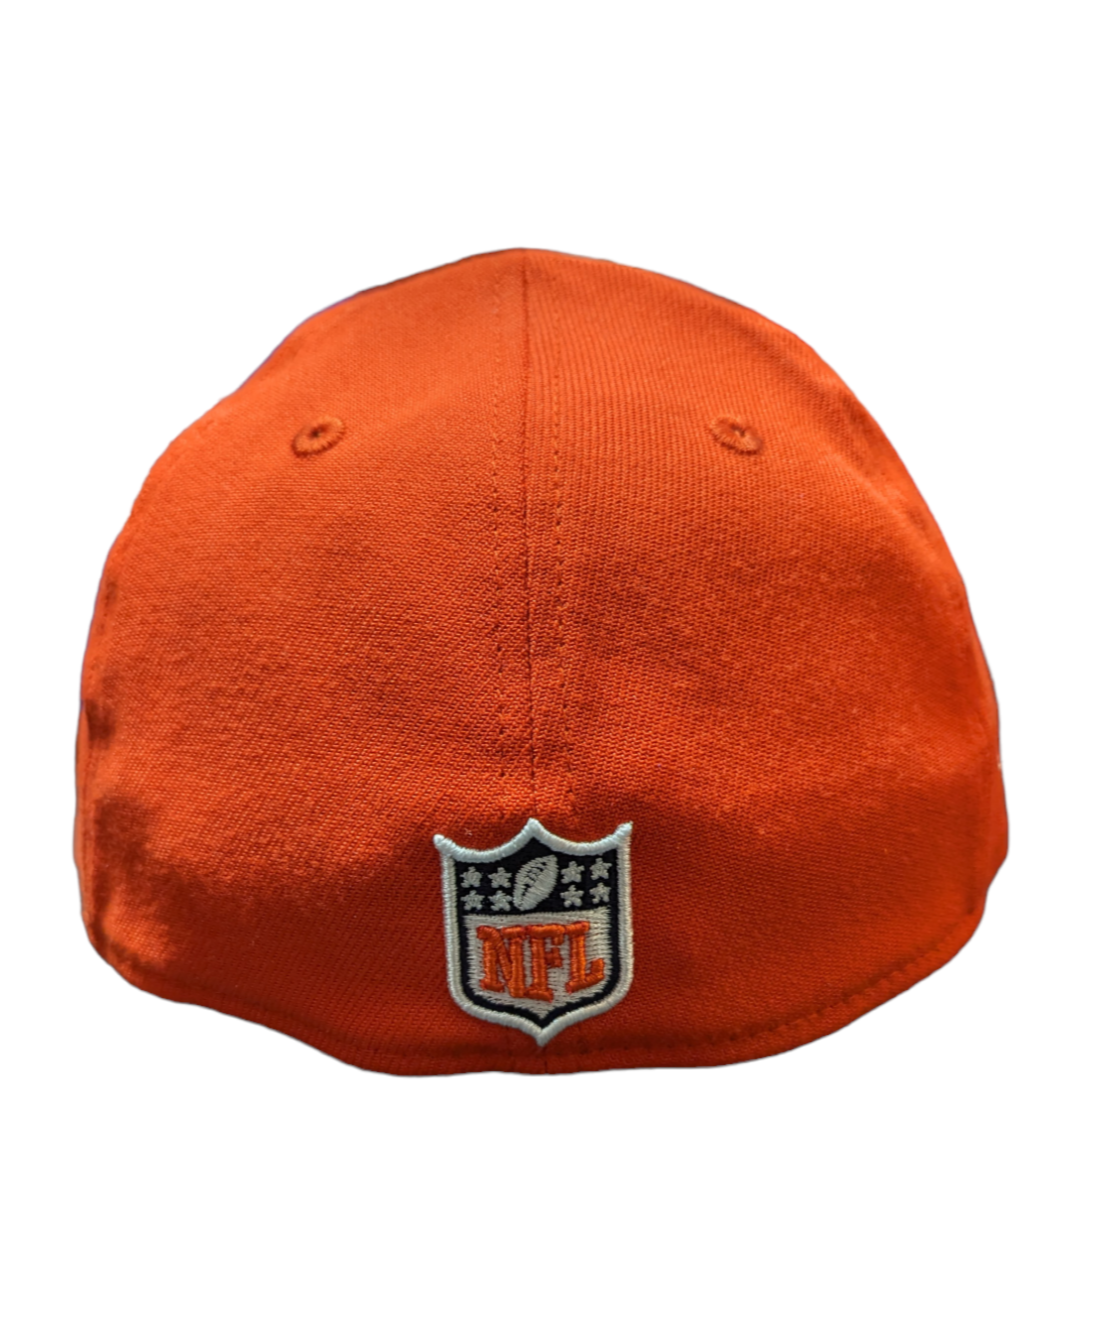 Men's Chicago Bears New Era 2 Tone Orange/Navy Alternate 39THIRTY Flex Hat